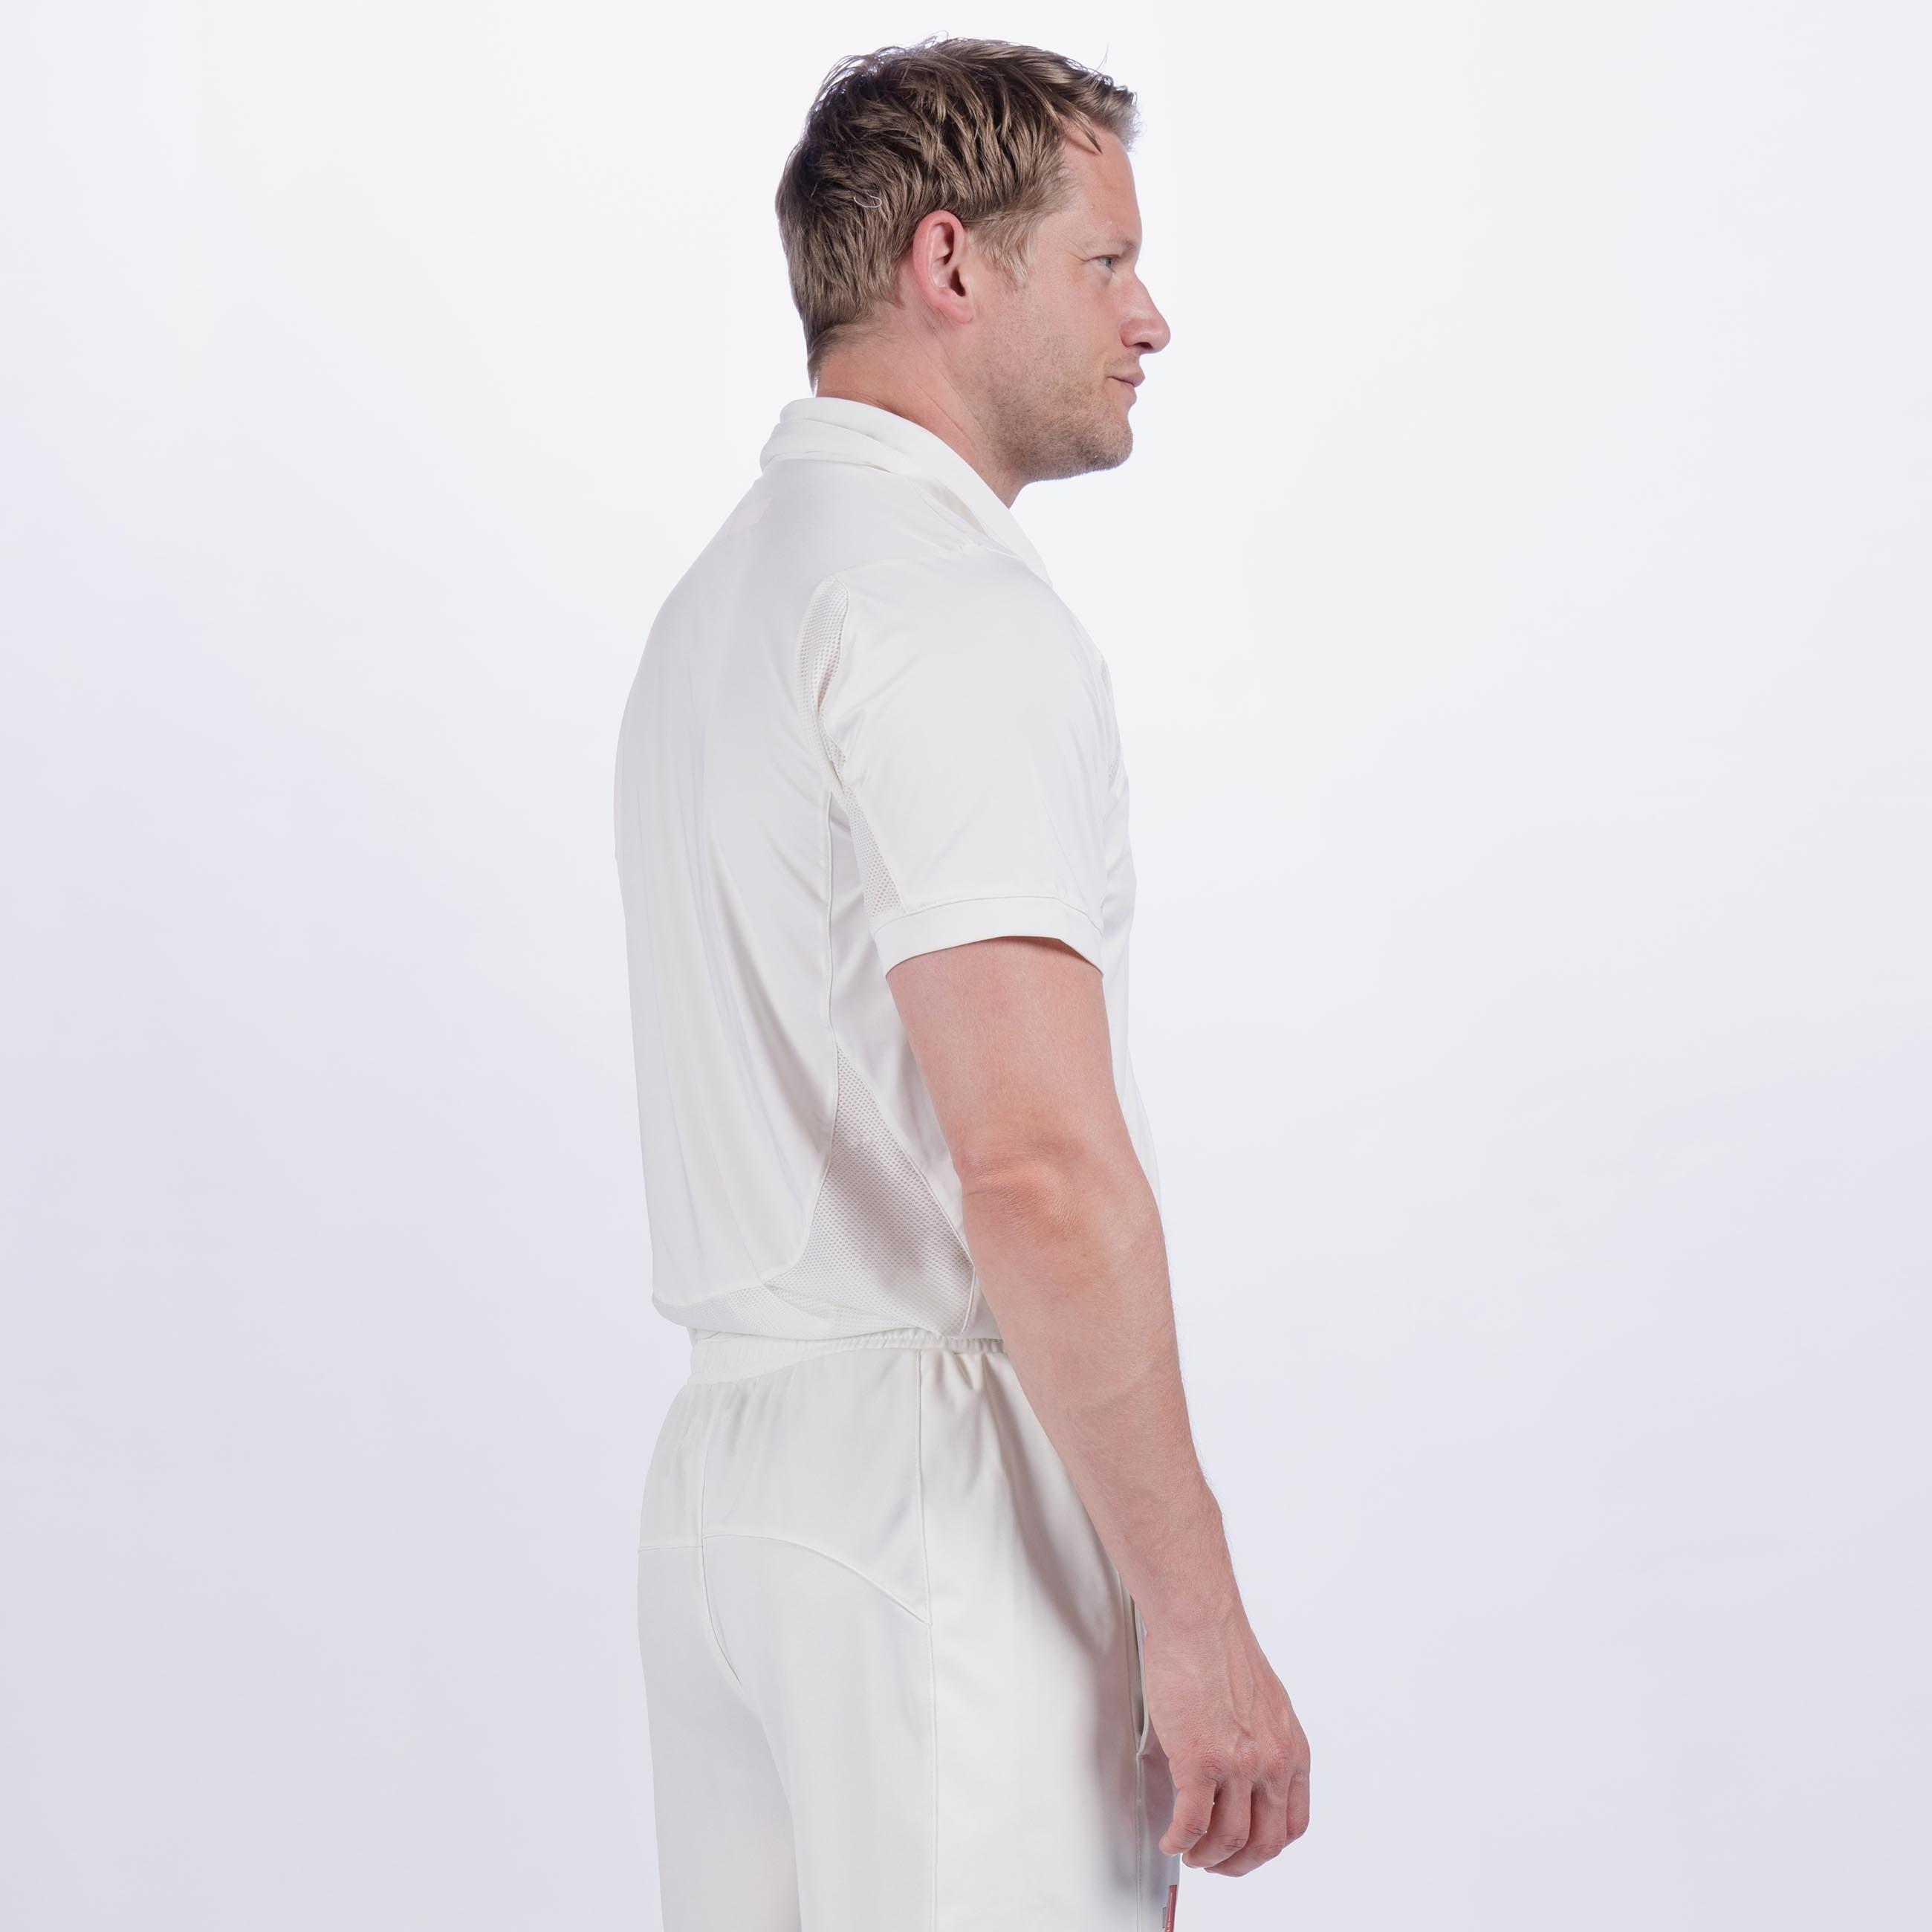 GRAY-NICOLLS Velocity Short Sleeve Shirt,  Ivory